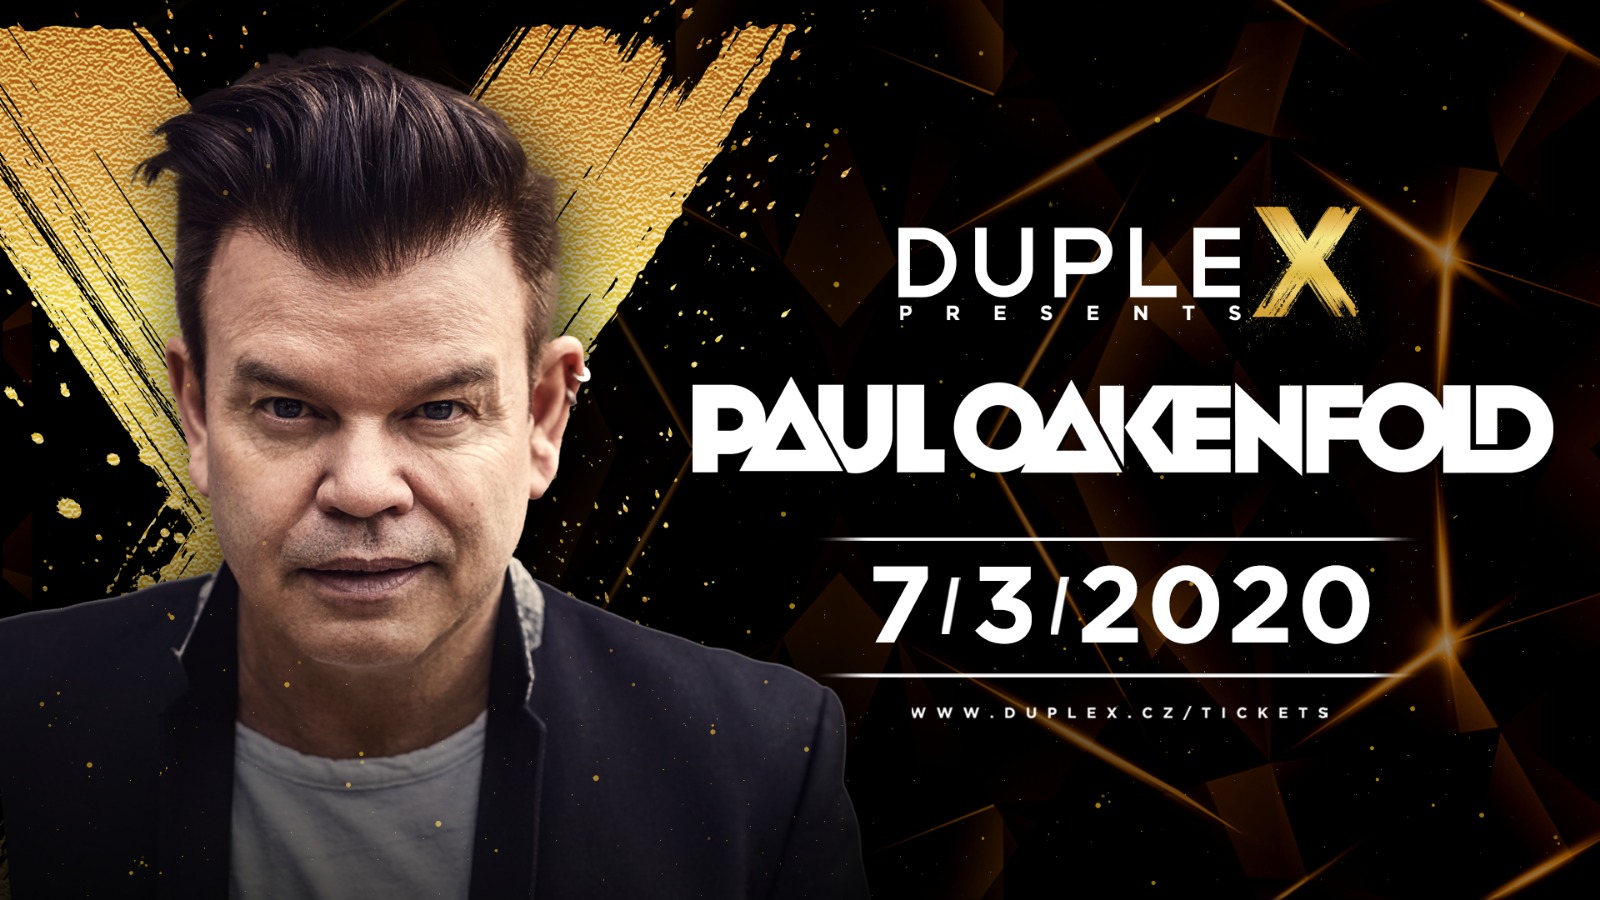 Duplex Presents Paul Oakenfold Duplex Prague